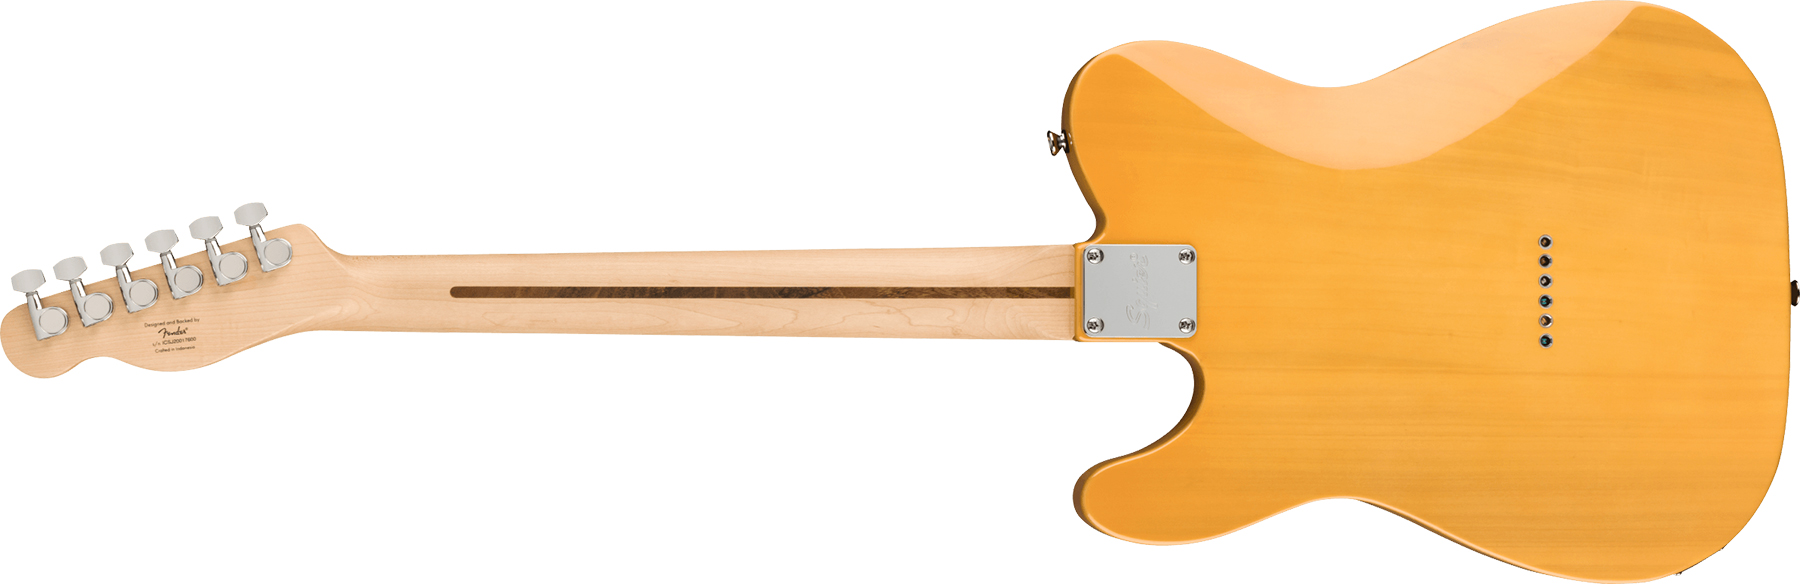 Squier Tele Affinity 2021 2s Mn - Butterscotch Blonde - Guitarra eléctrica con forma de tel - Variation 1